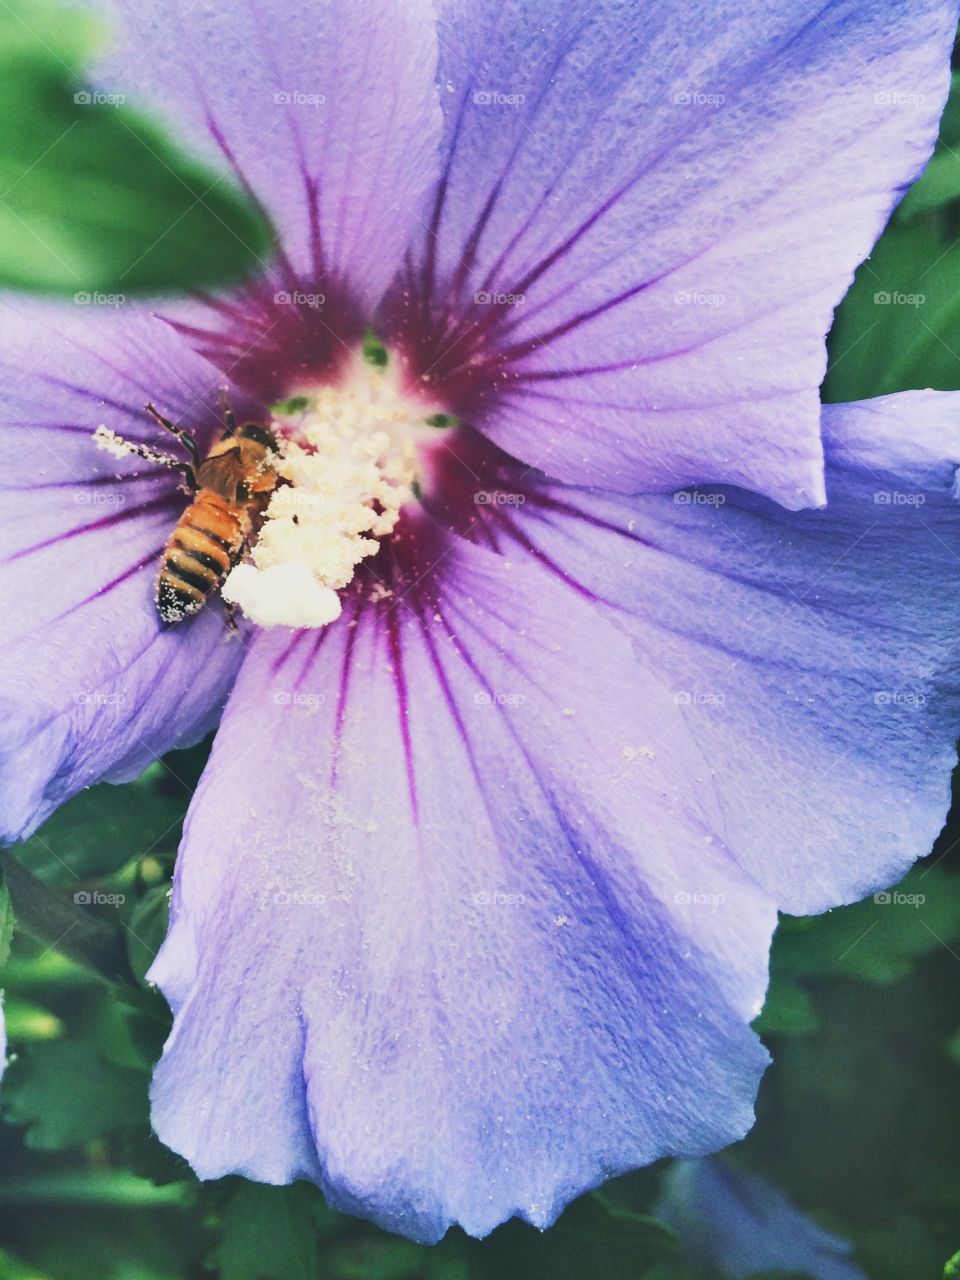 honeybee pollinating flower